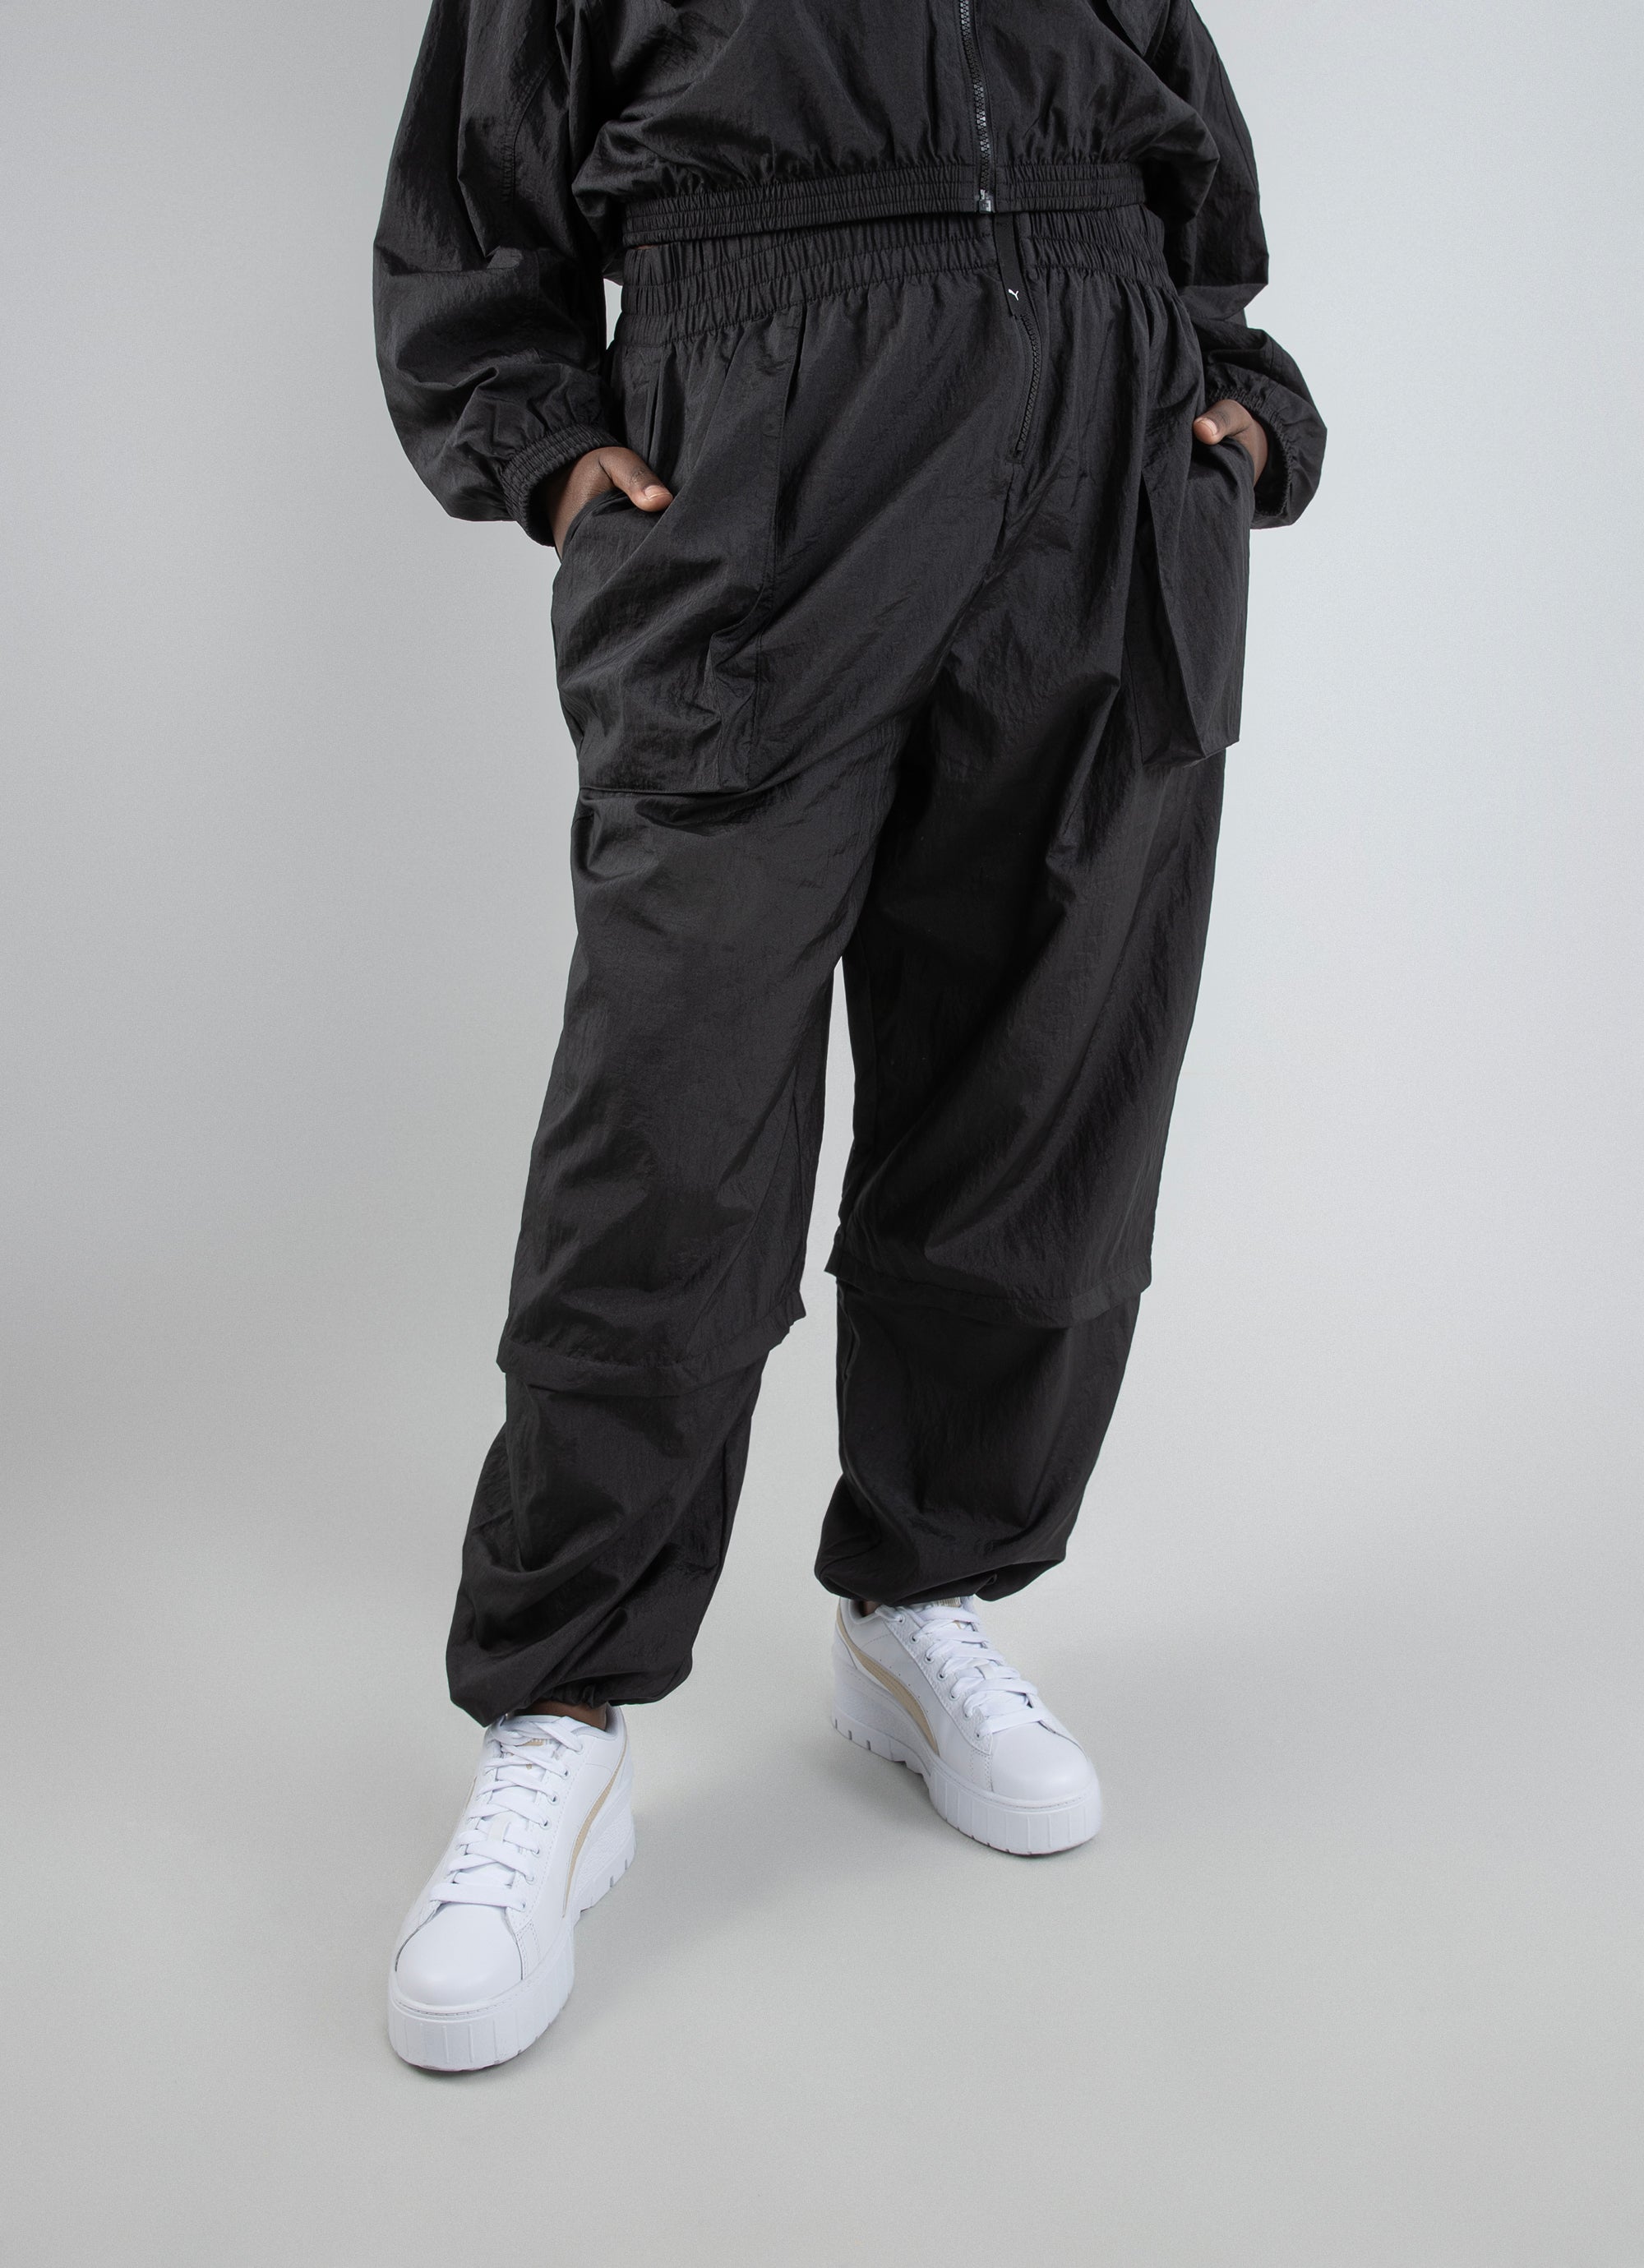 Puma Sweat Pants : Buy Puma BMW M Motorsport SDS Men's Regular Sweatpants  Online|Nykaa fashion